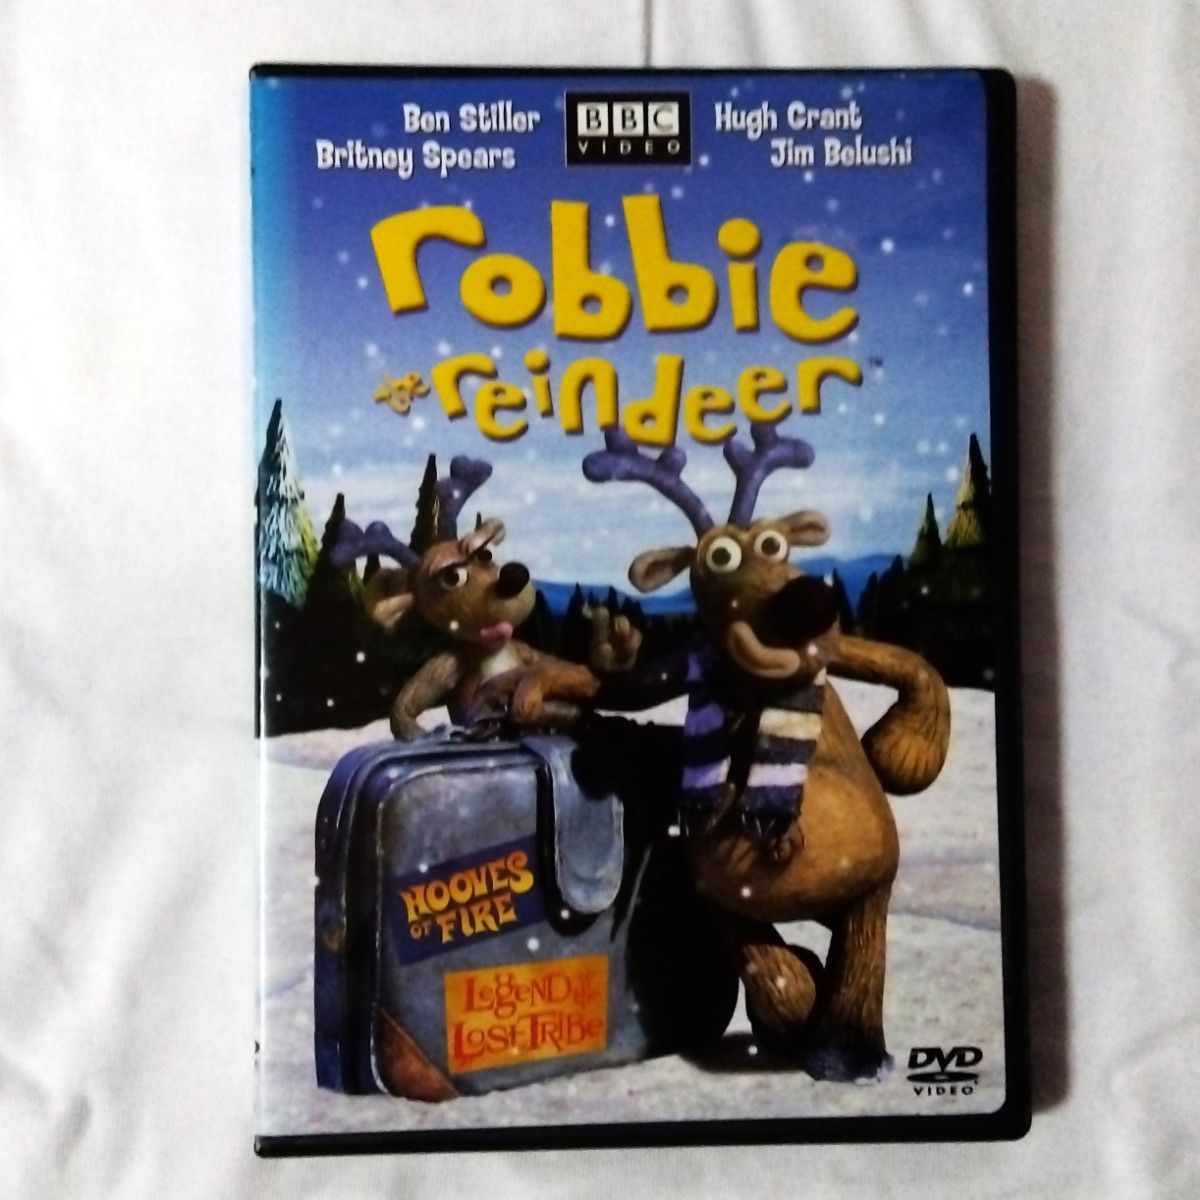 US版「creature comforts」＋「robbie the reindeer」 DVD２枚